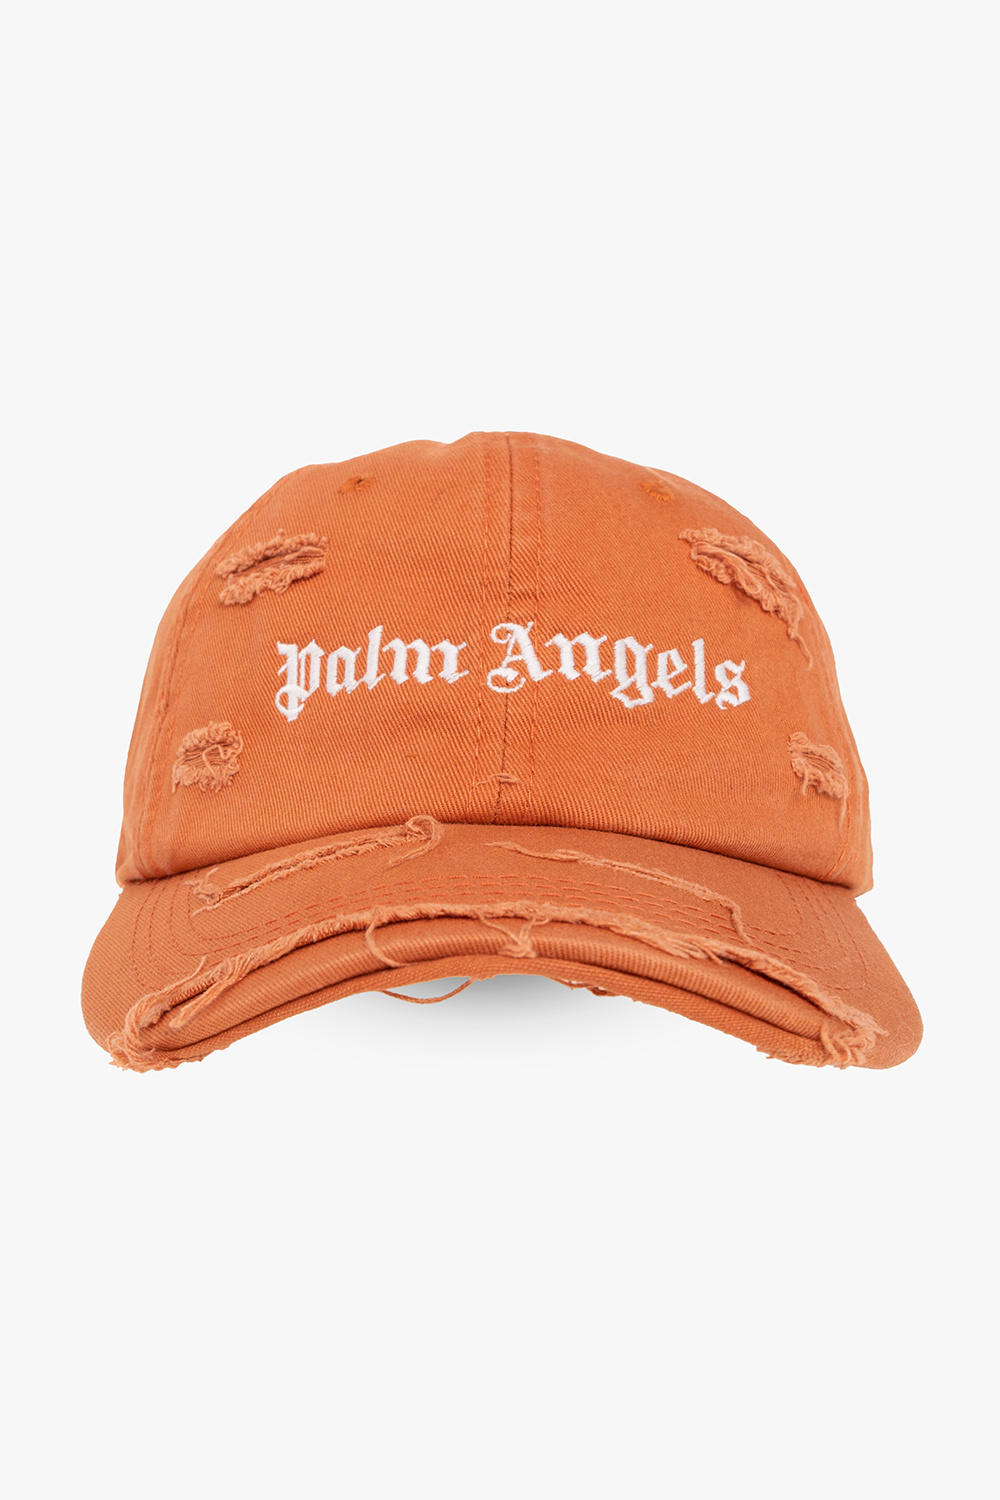 Palm Angels Cotton baseball cap